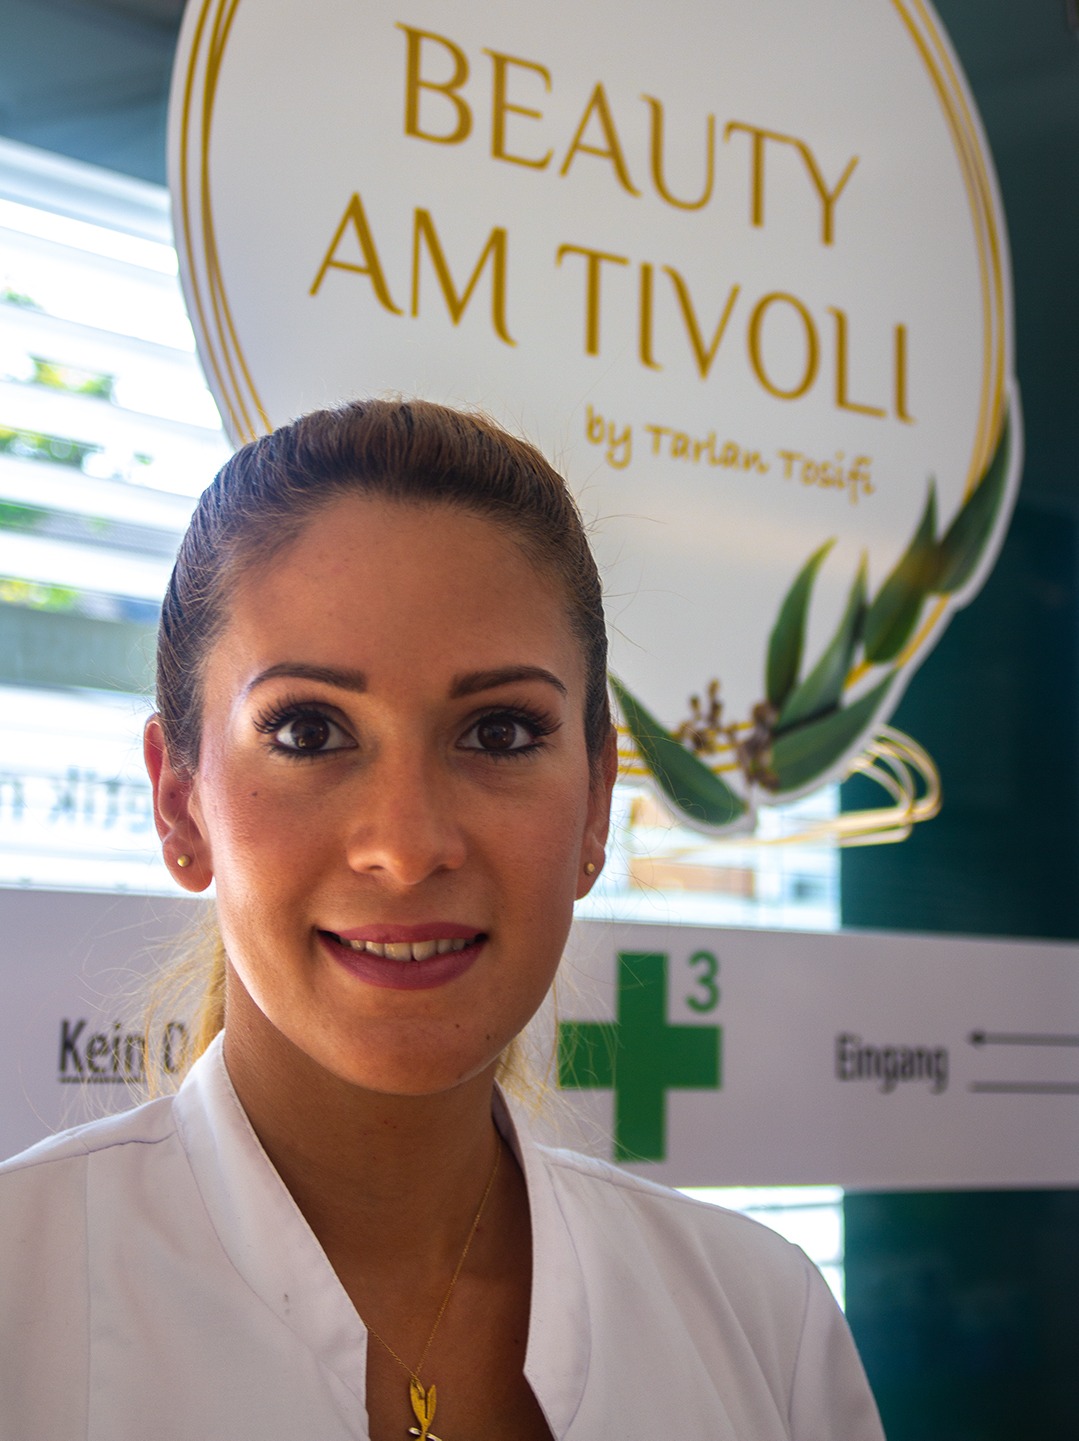 Beauty am Tivoli 
Kosmetikstudio und Dauerhafte Haarentfernung in Aachen